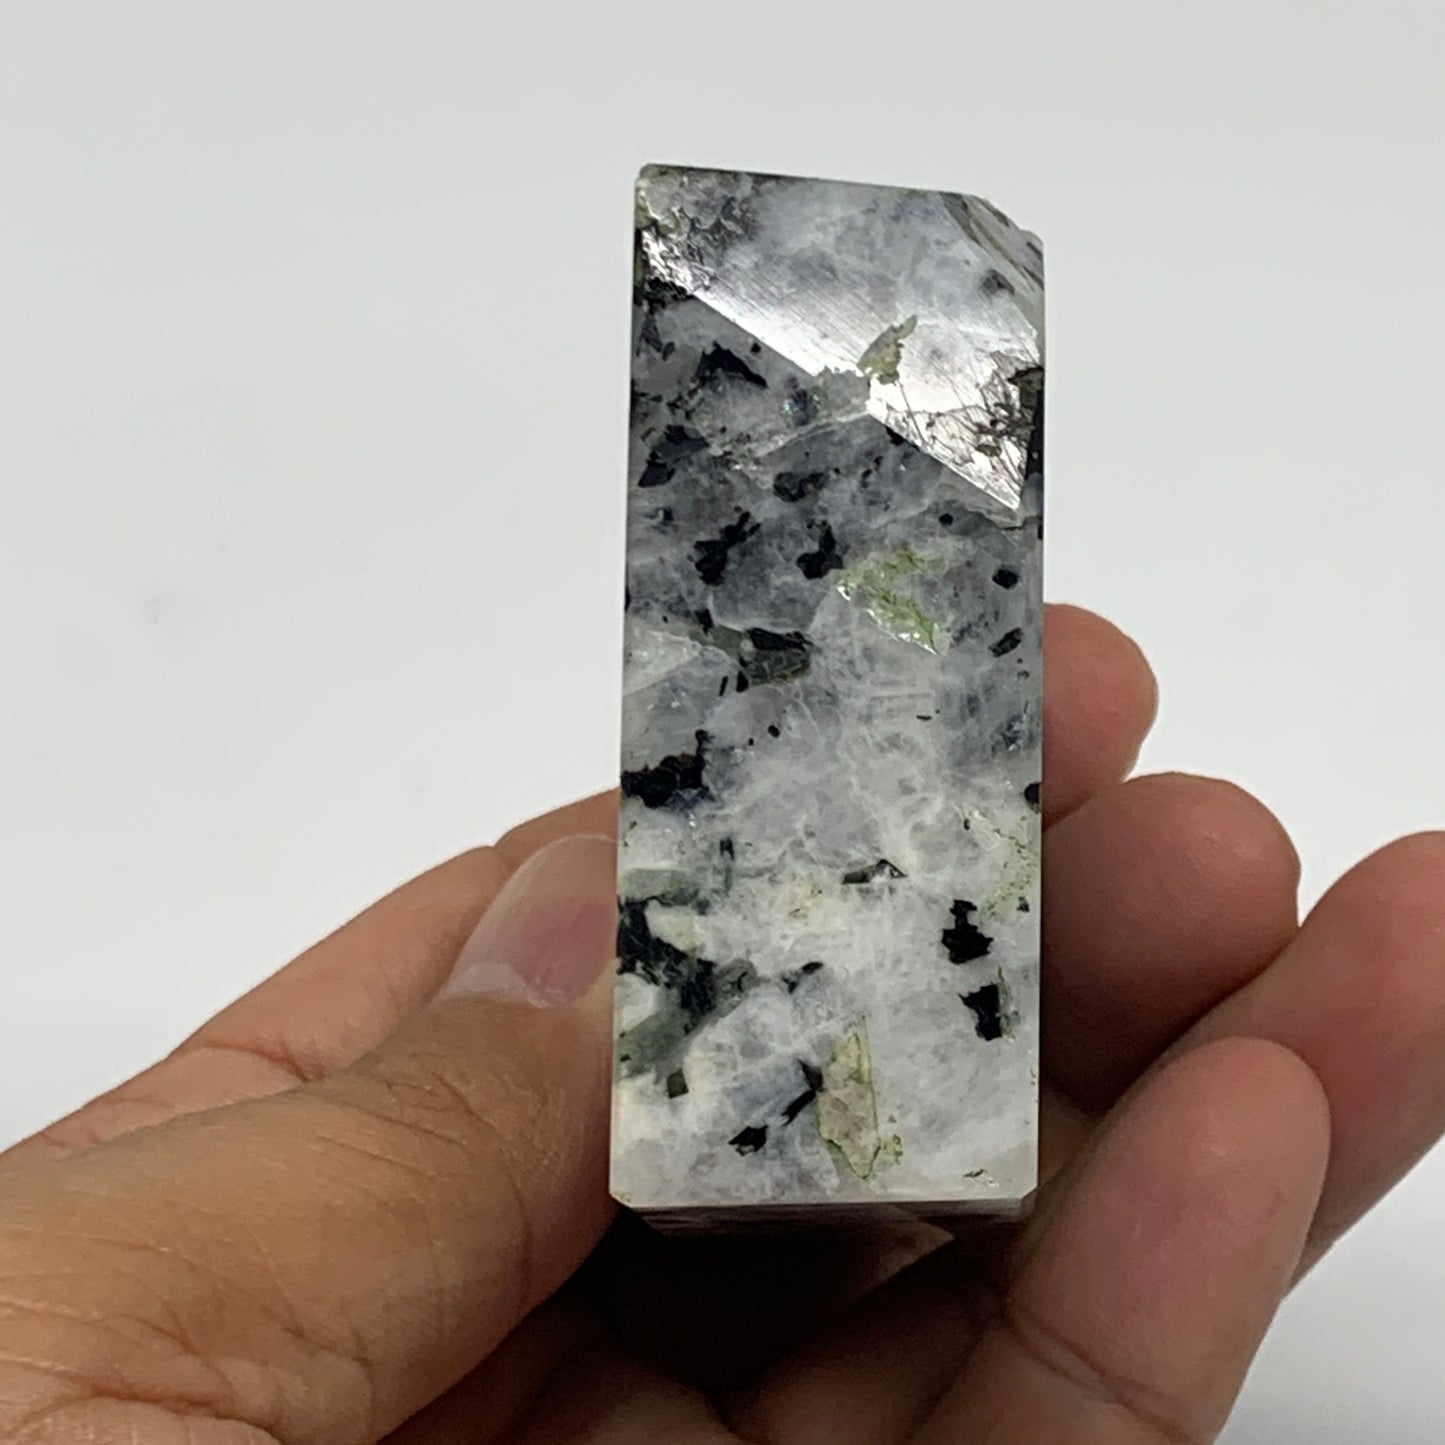 137.1g, 2.4"x2"x0.9", Natural Rainbow Moonstone Freeform Crystal Polished @India